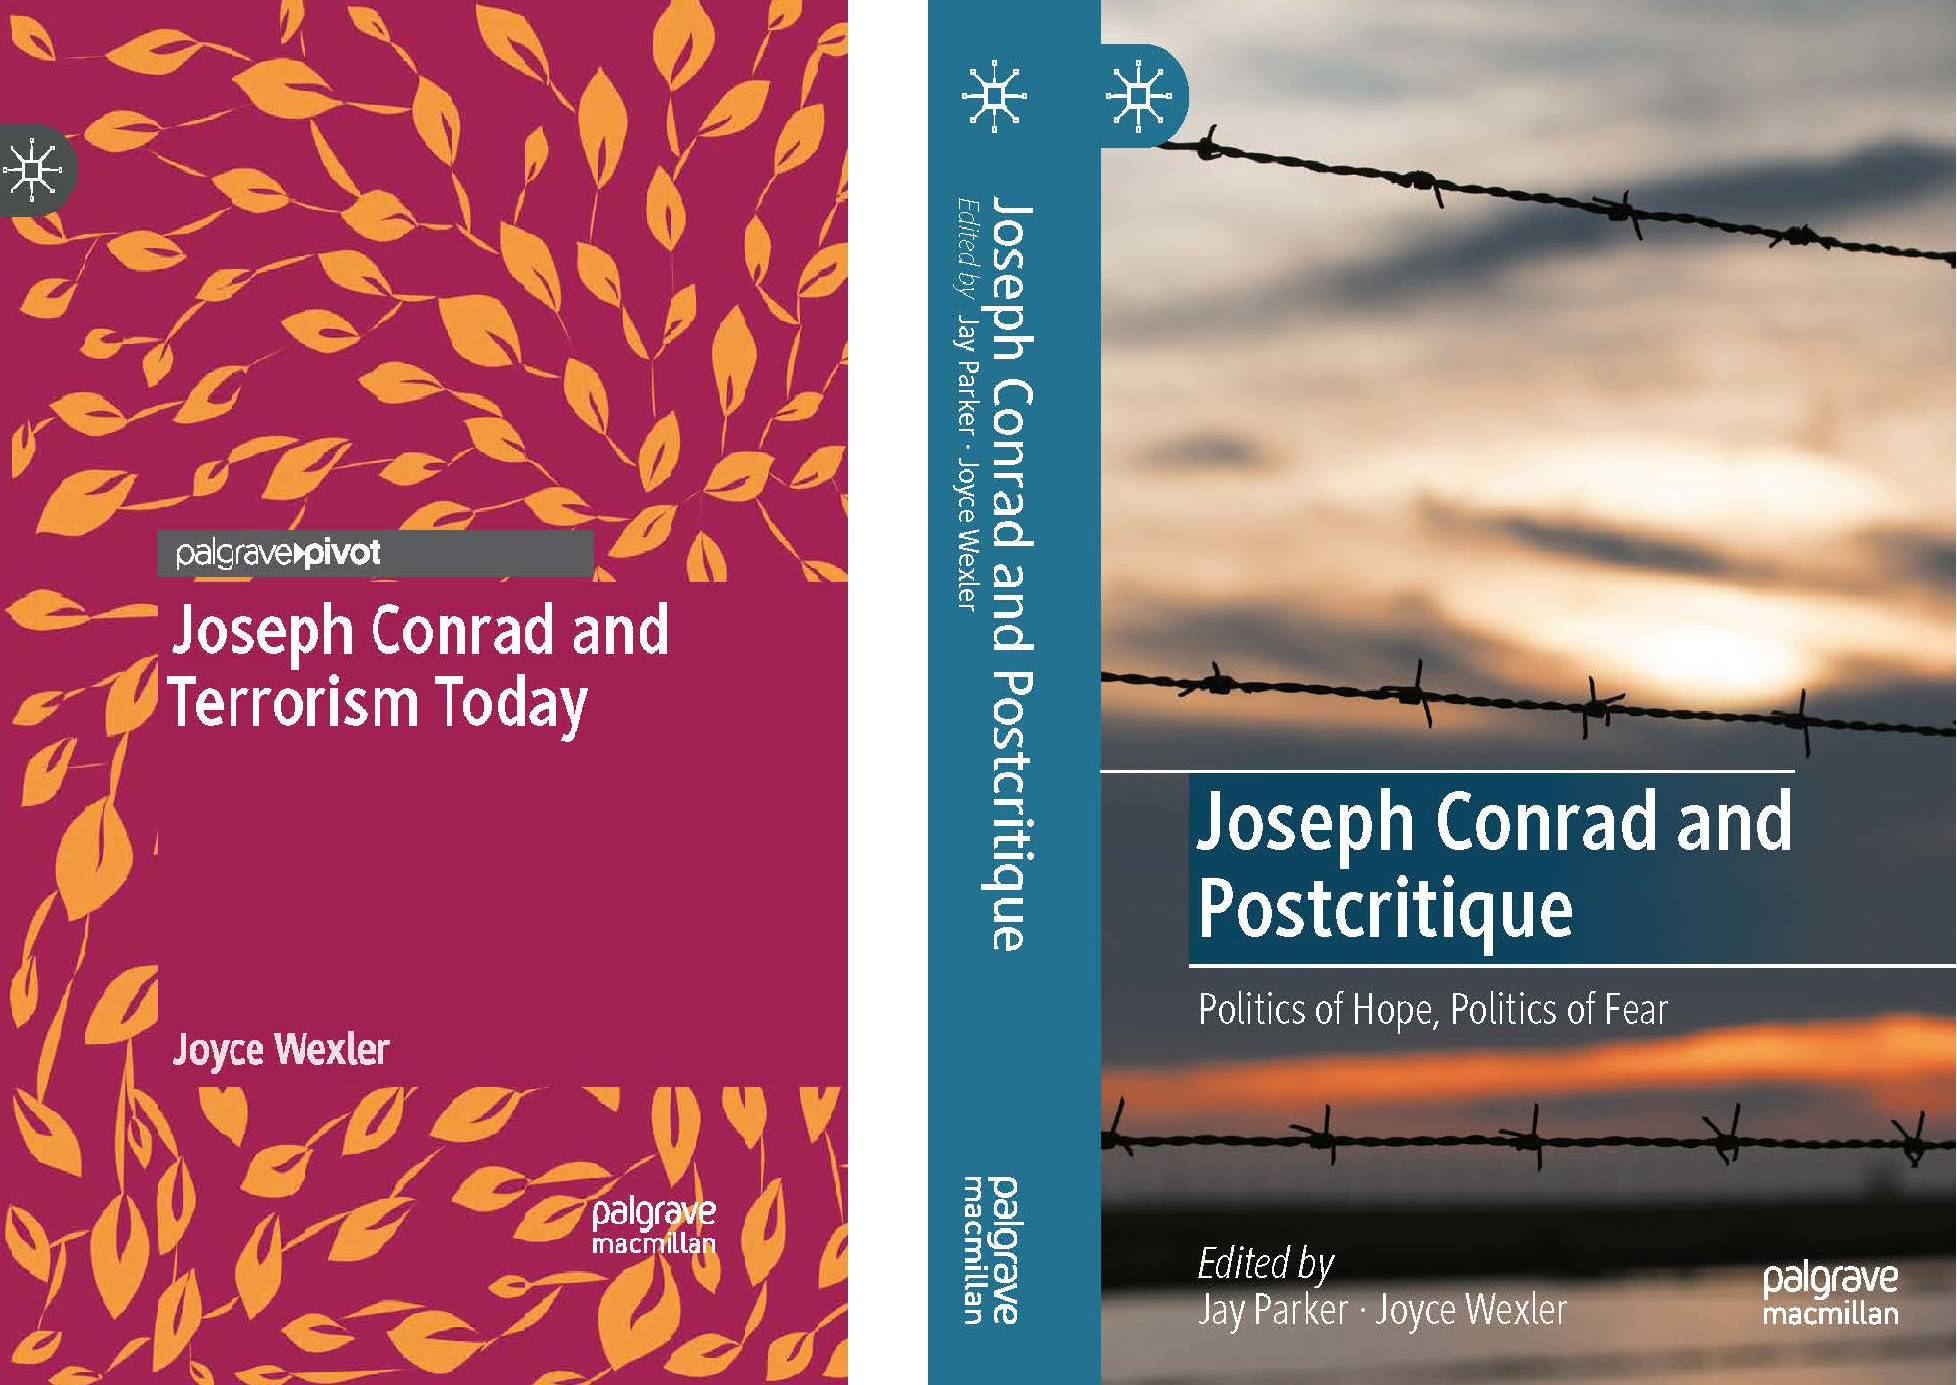 Professor Emeritus Joyce Wexler publishes two new books on Joseph Conrad